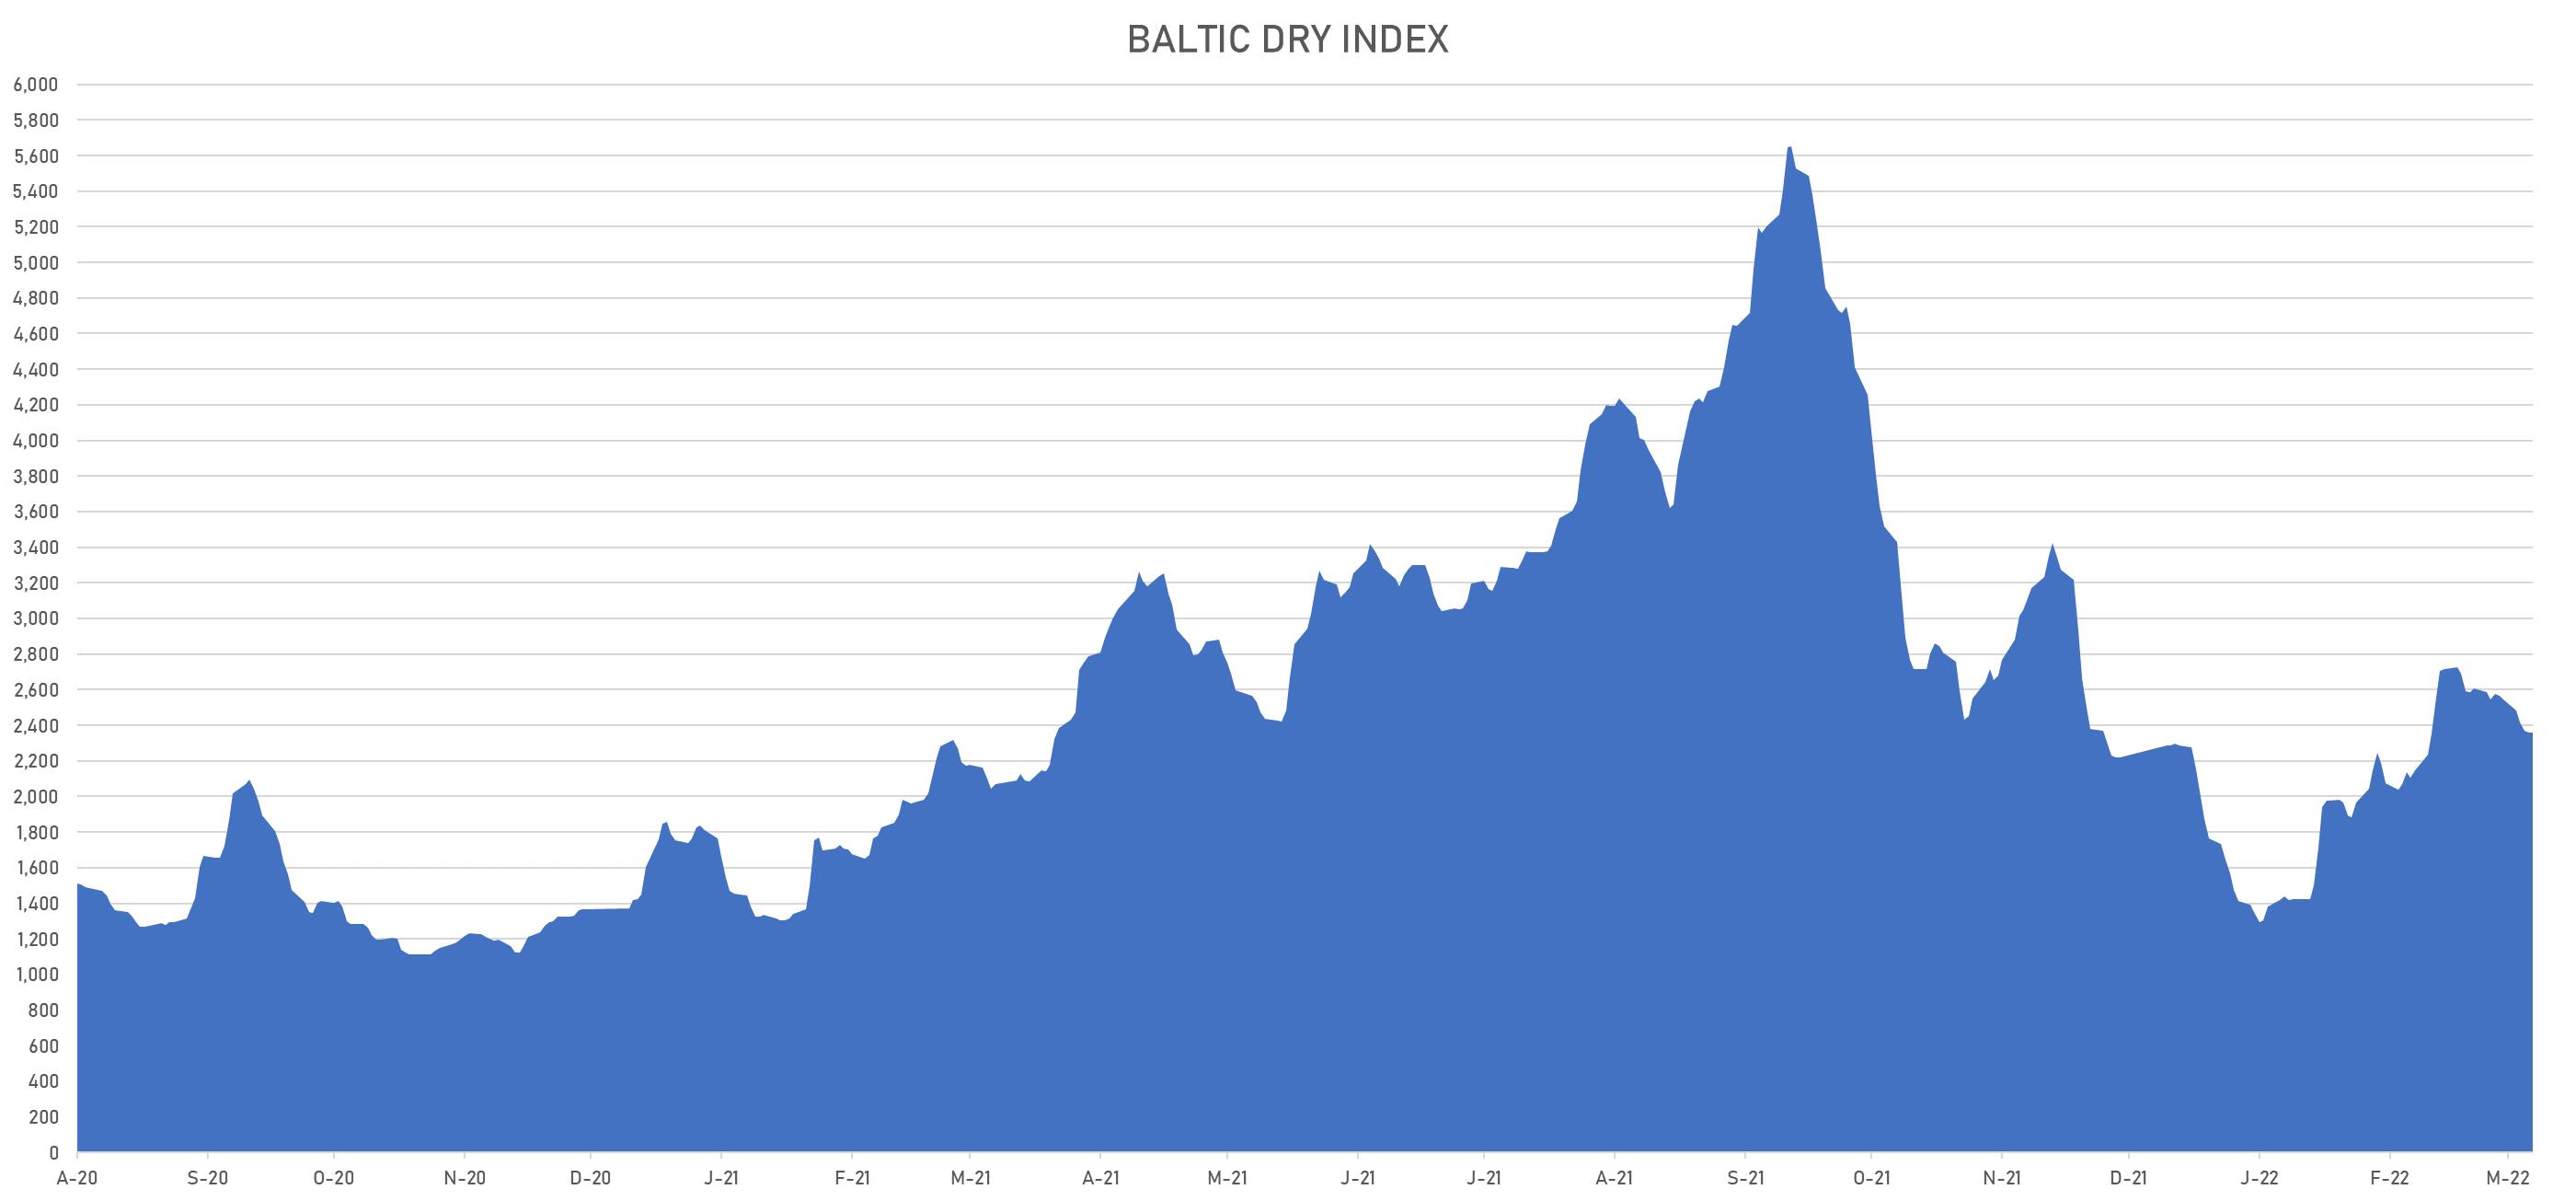 Baltic Dry index | Sources: phipost.com, Refinitiv data